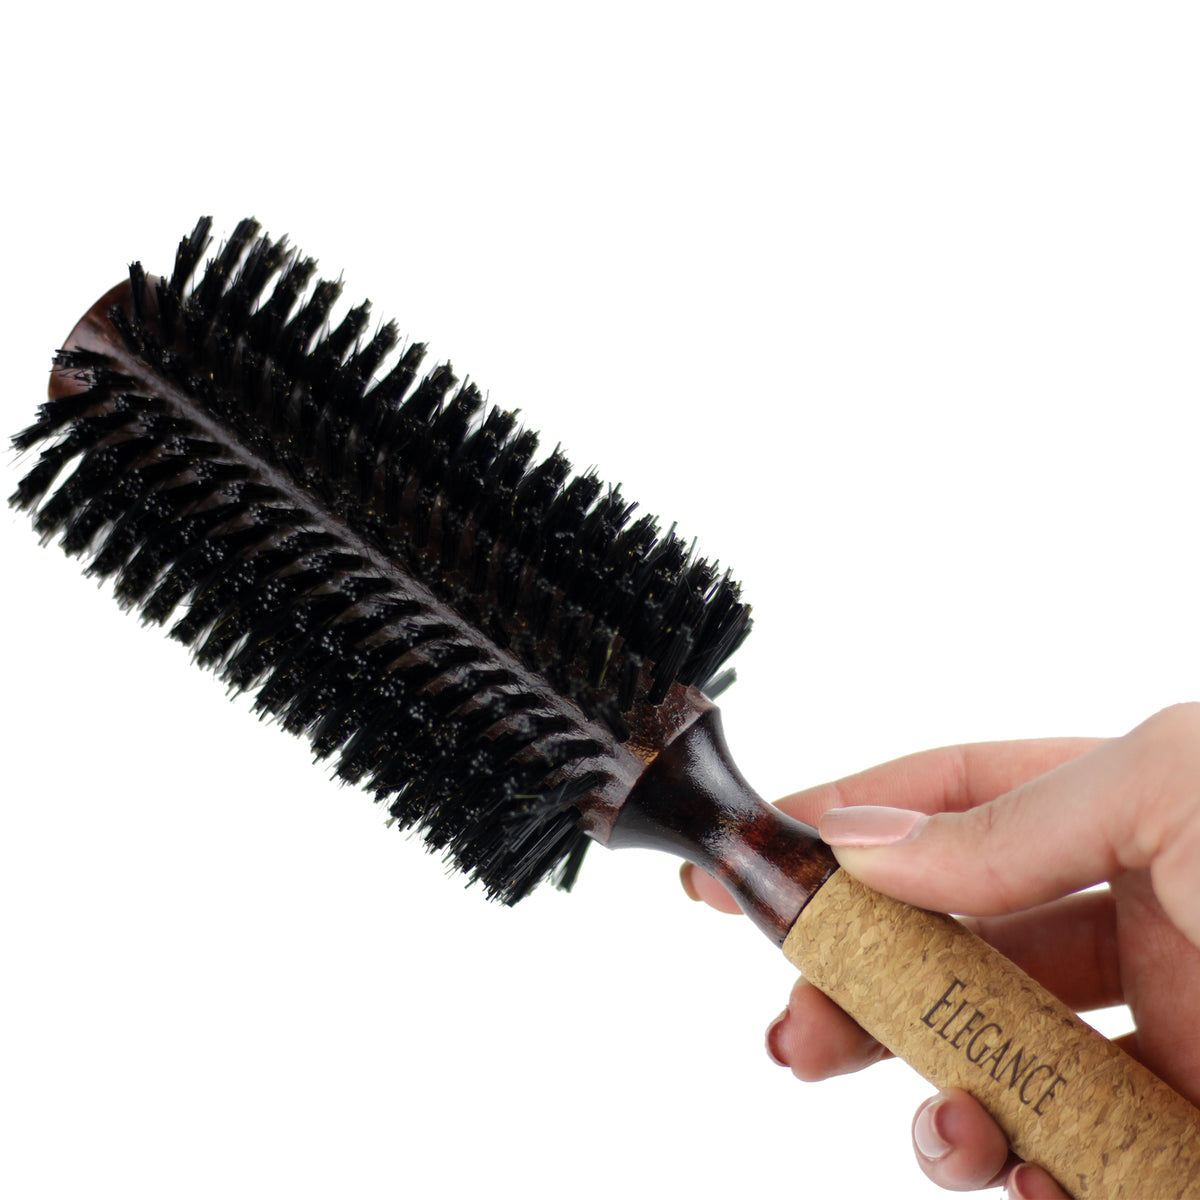 LADO ROUND BRUSHES .CERAMIC, 100% BOAR, BLACK WOOD, SPONGE GRIP – Elegance  Hair Care